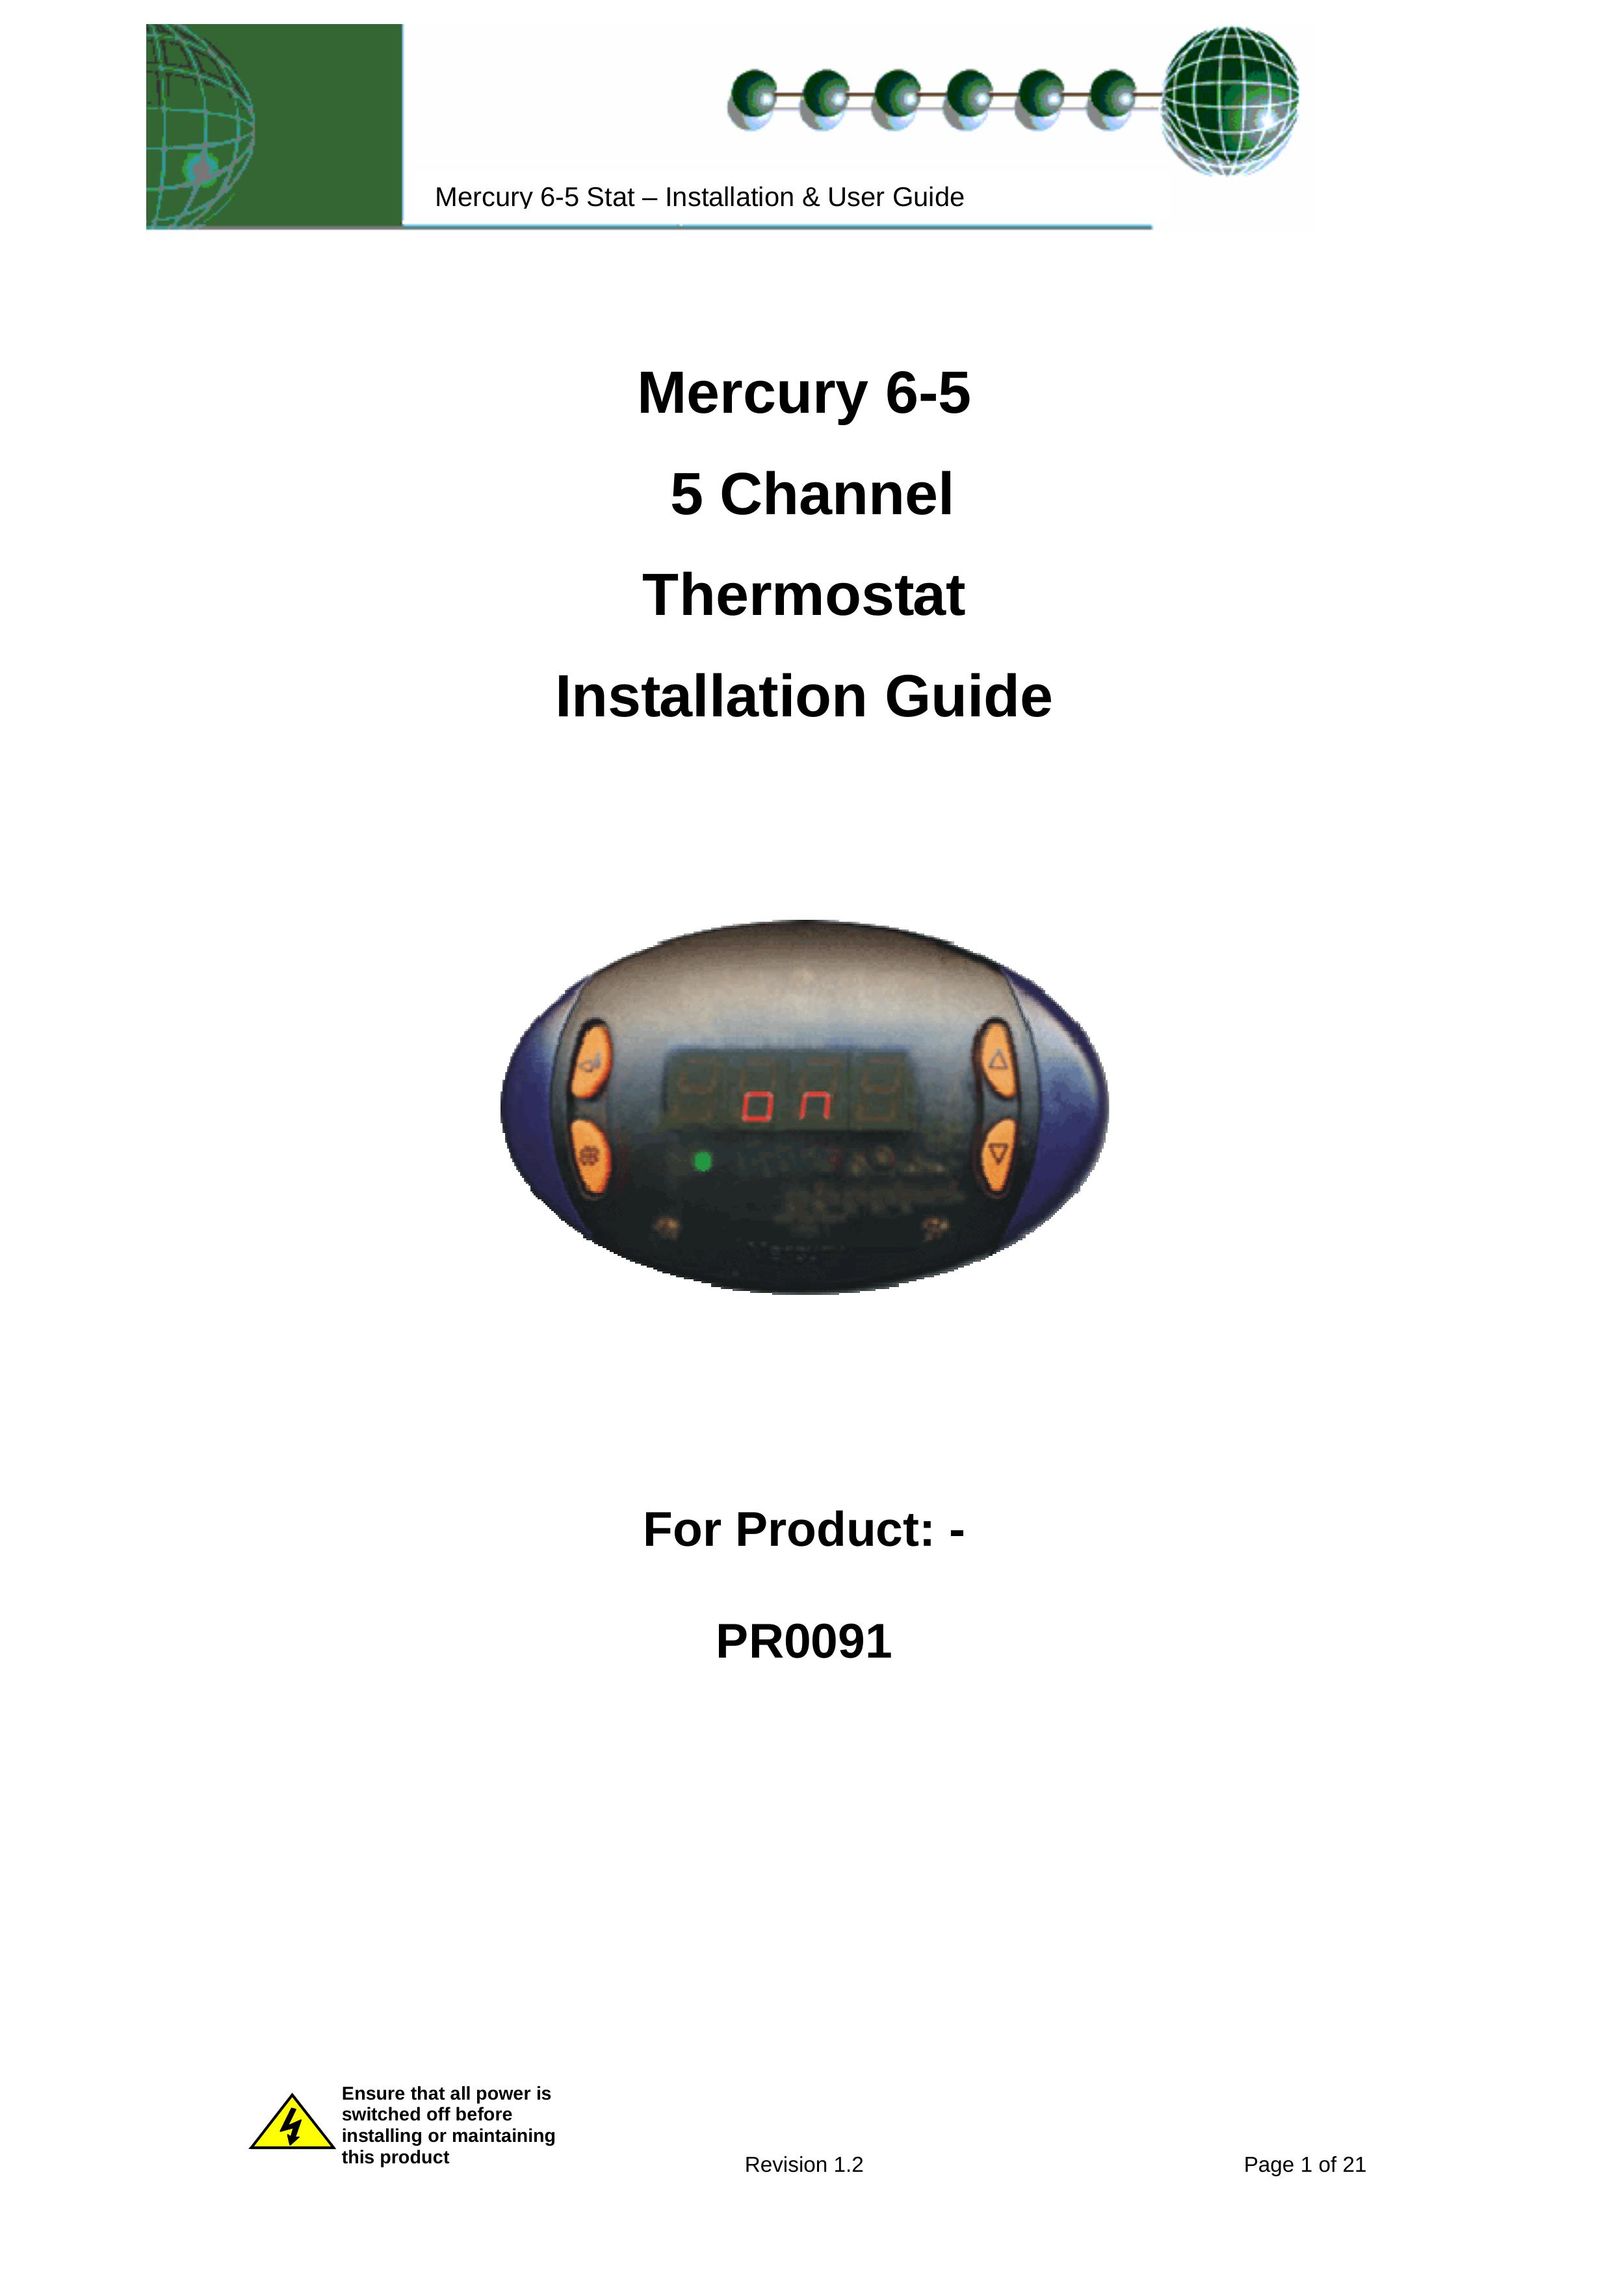 Mercury PR0091 Thermostat User Manual